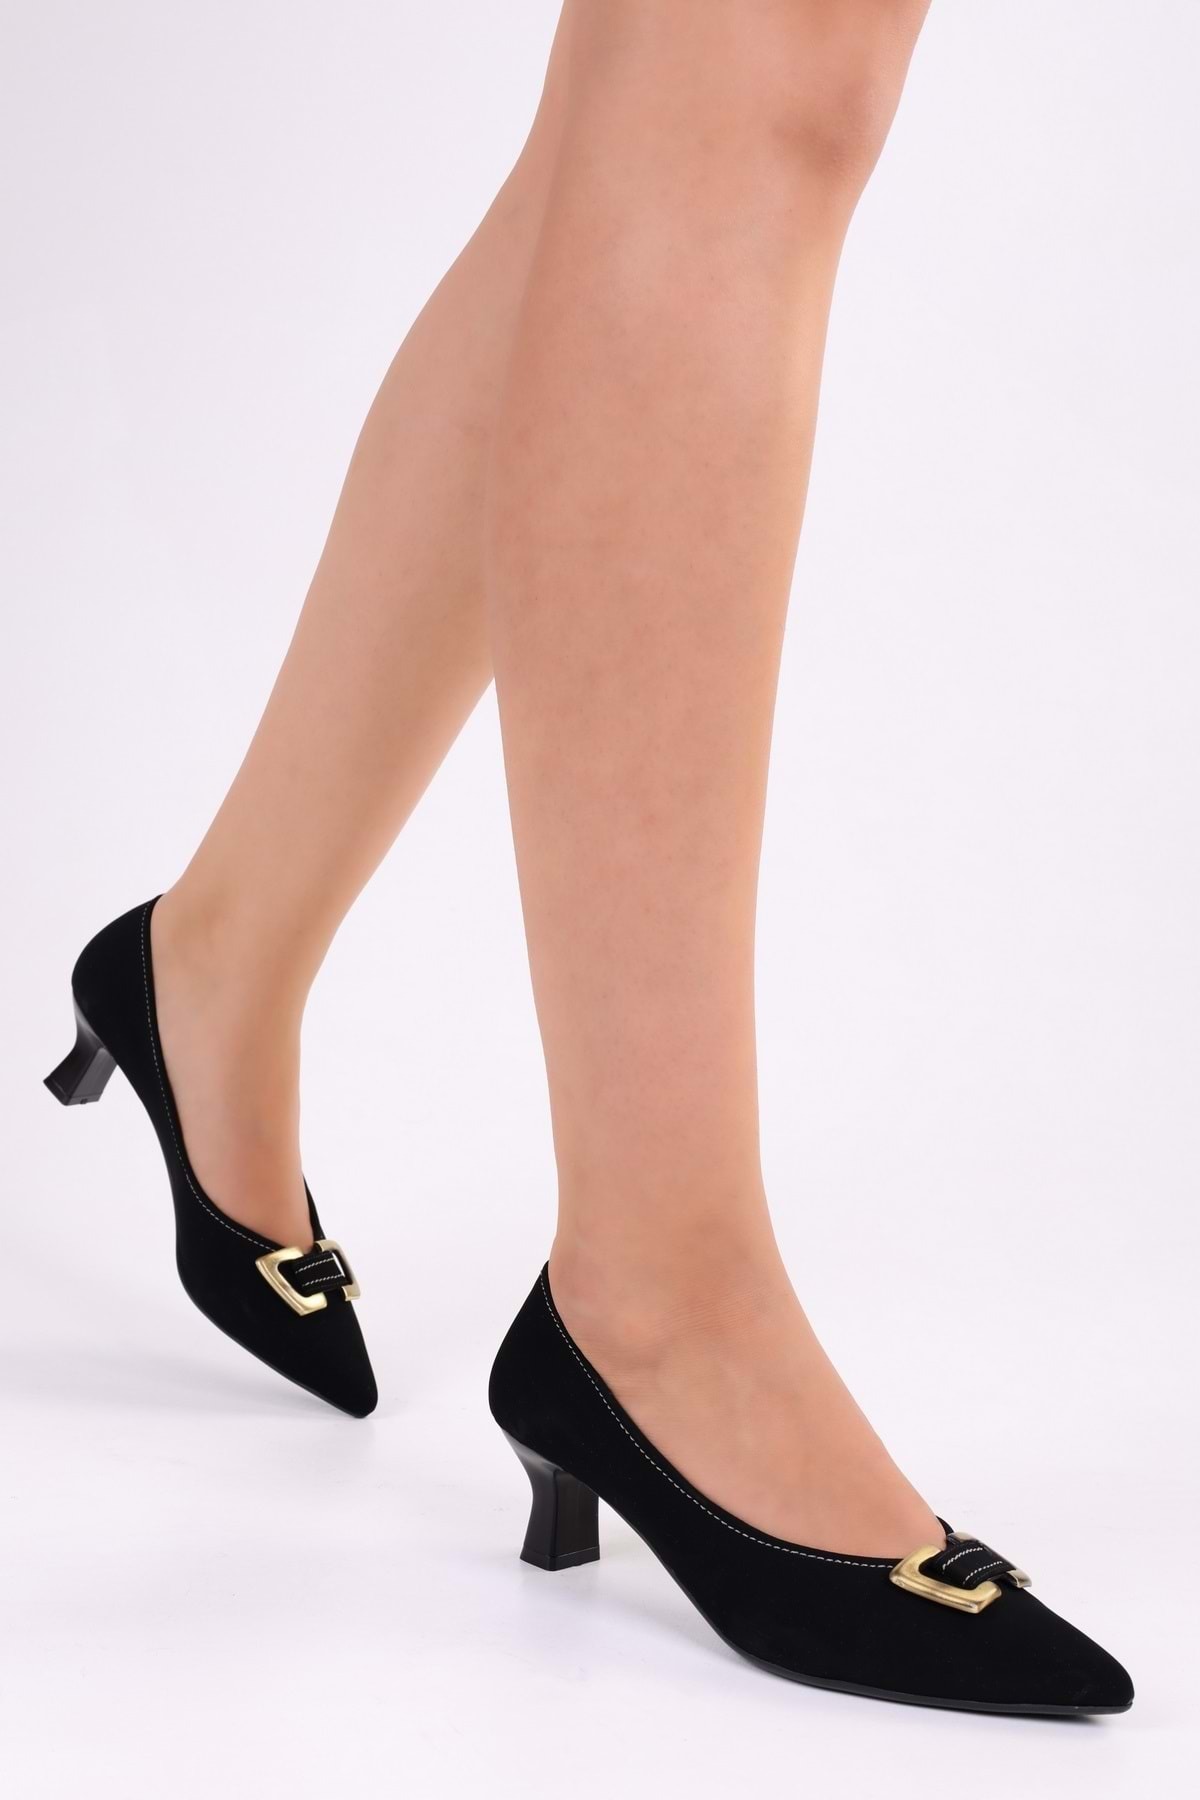 Shoeberry Women's Rover Black Suede Heeled Shoes Stiletto